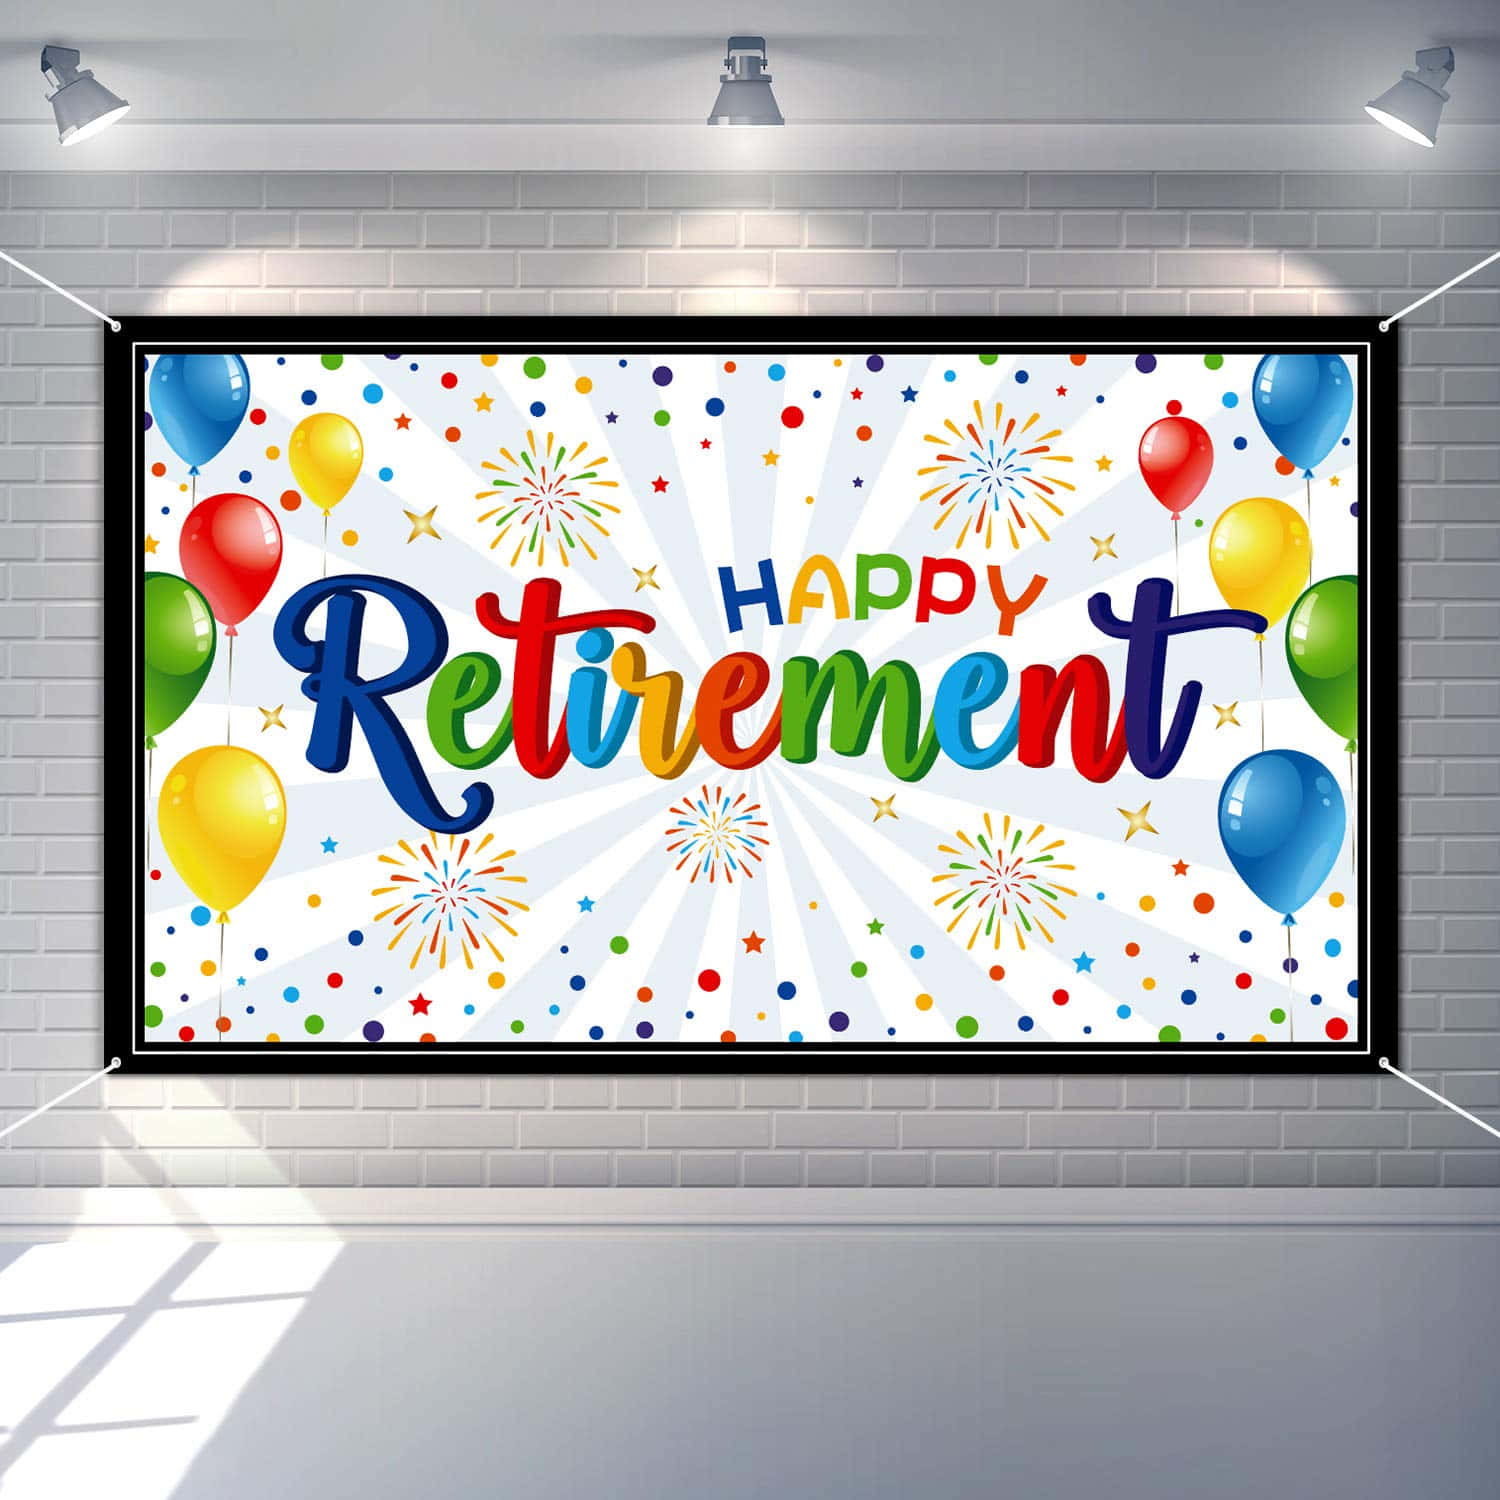 Celebrating life's journey to Retirement